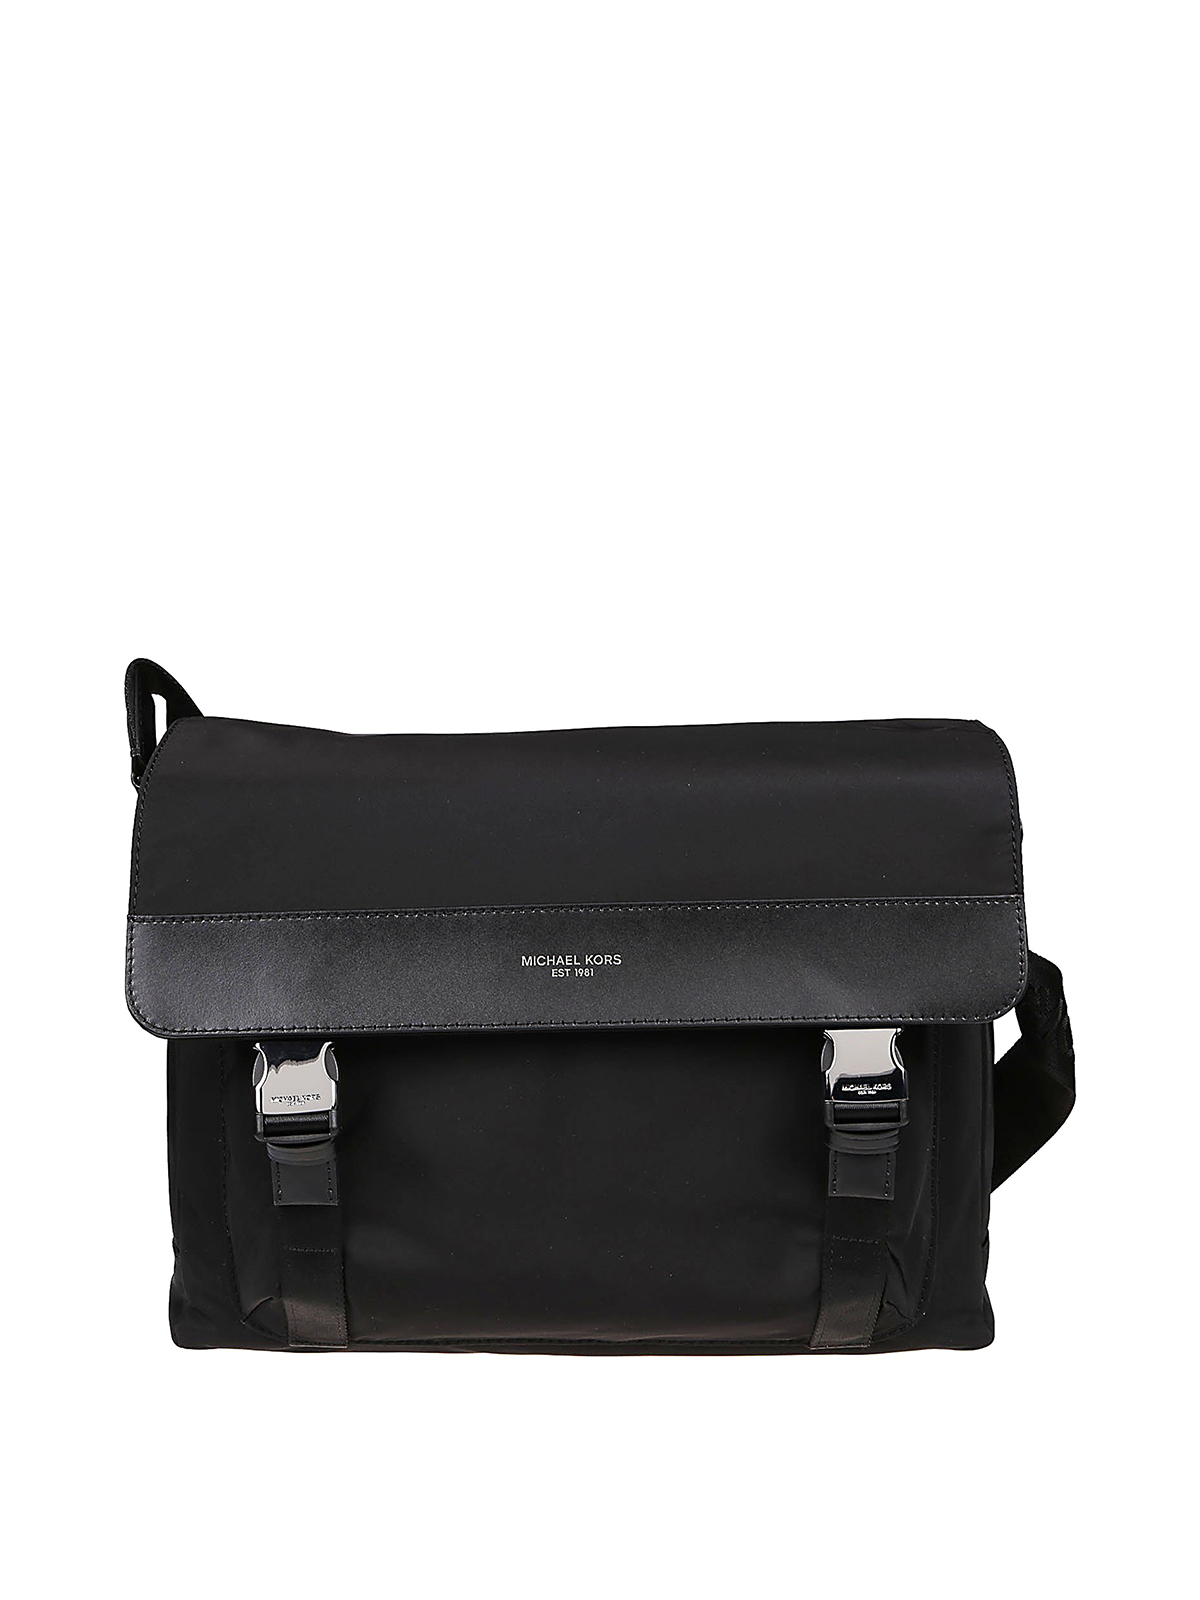 Shoulder bags Michael Kors - Brooklyn black nylon messenger bag 